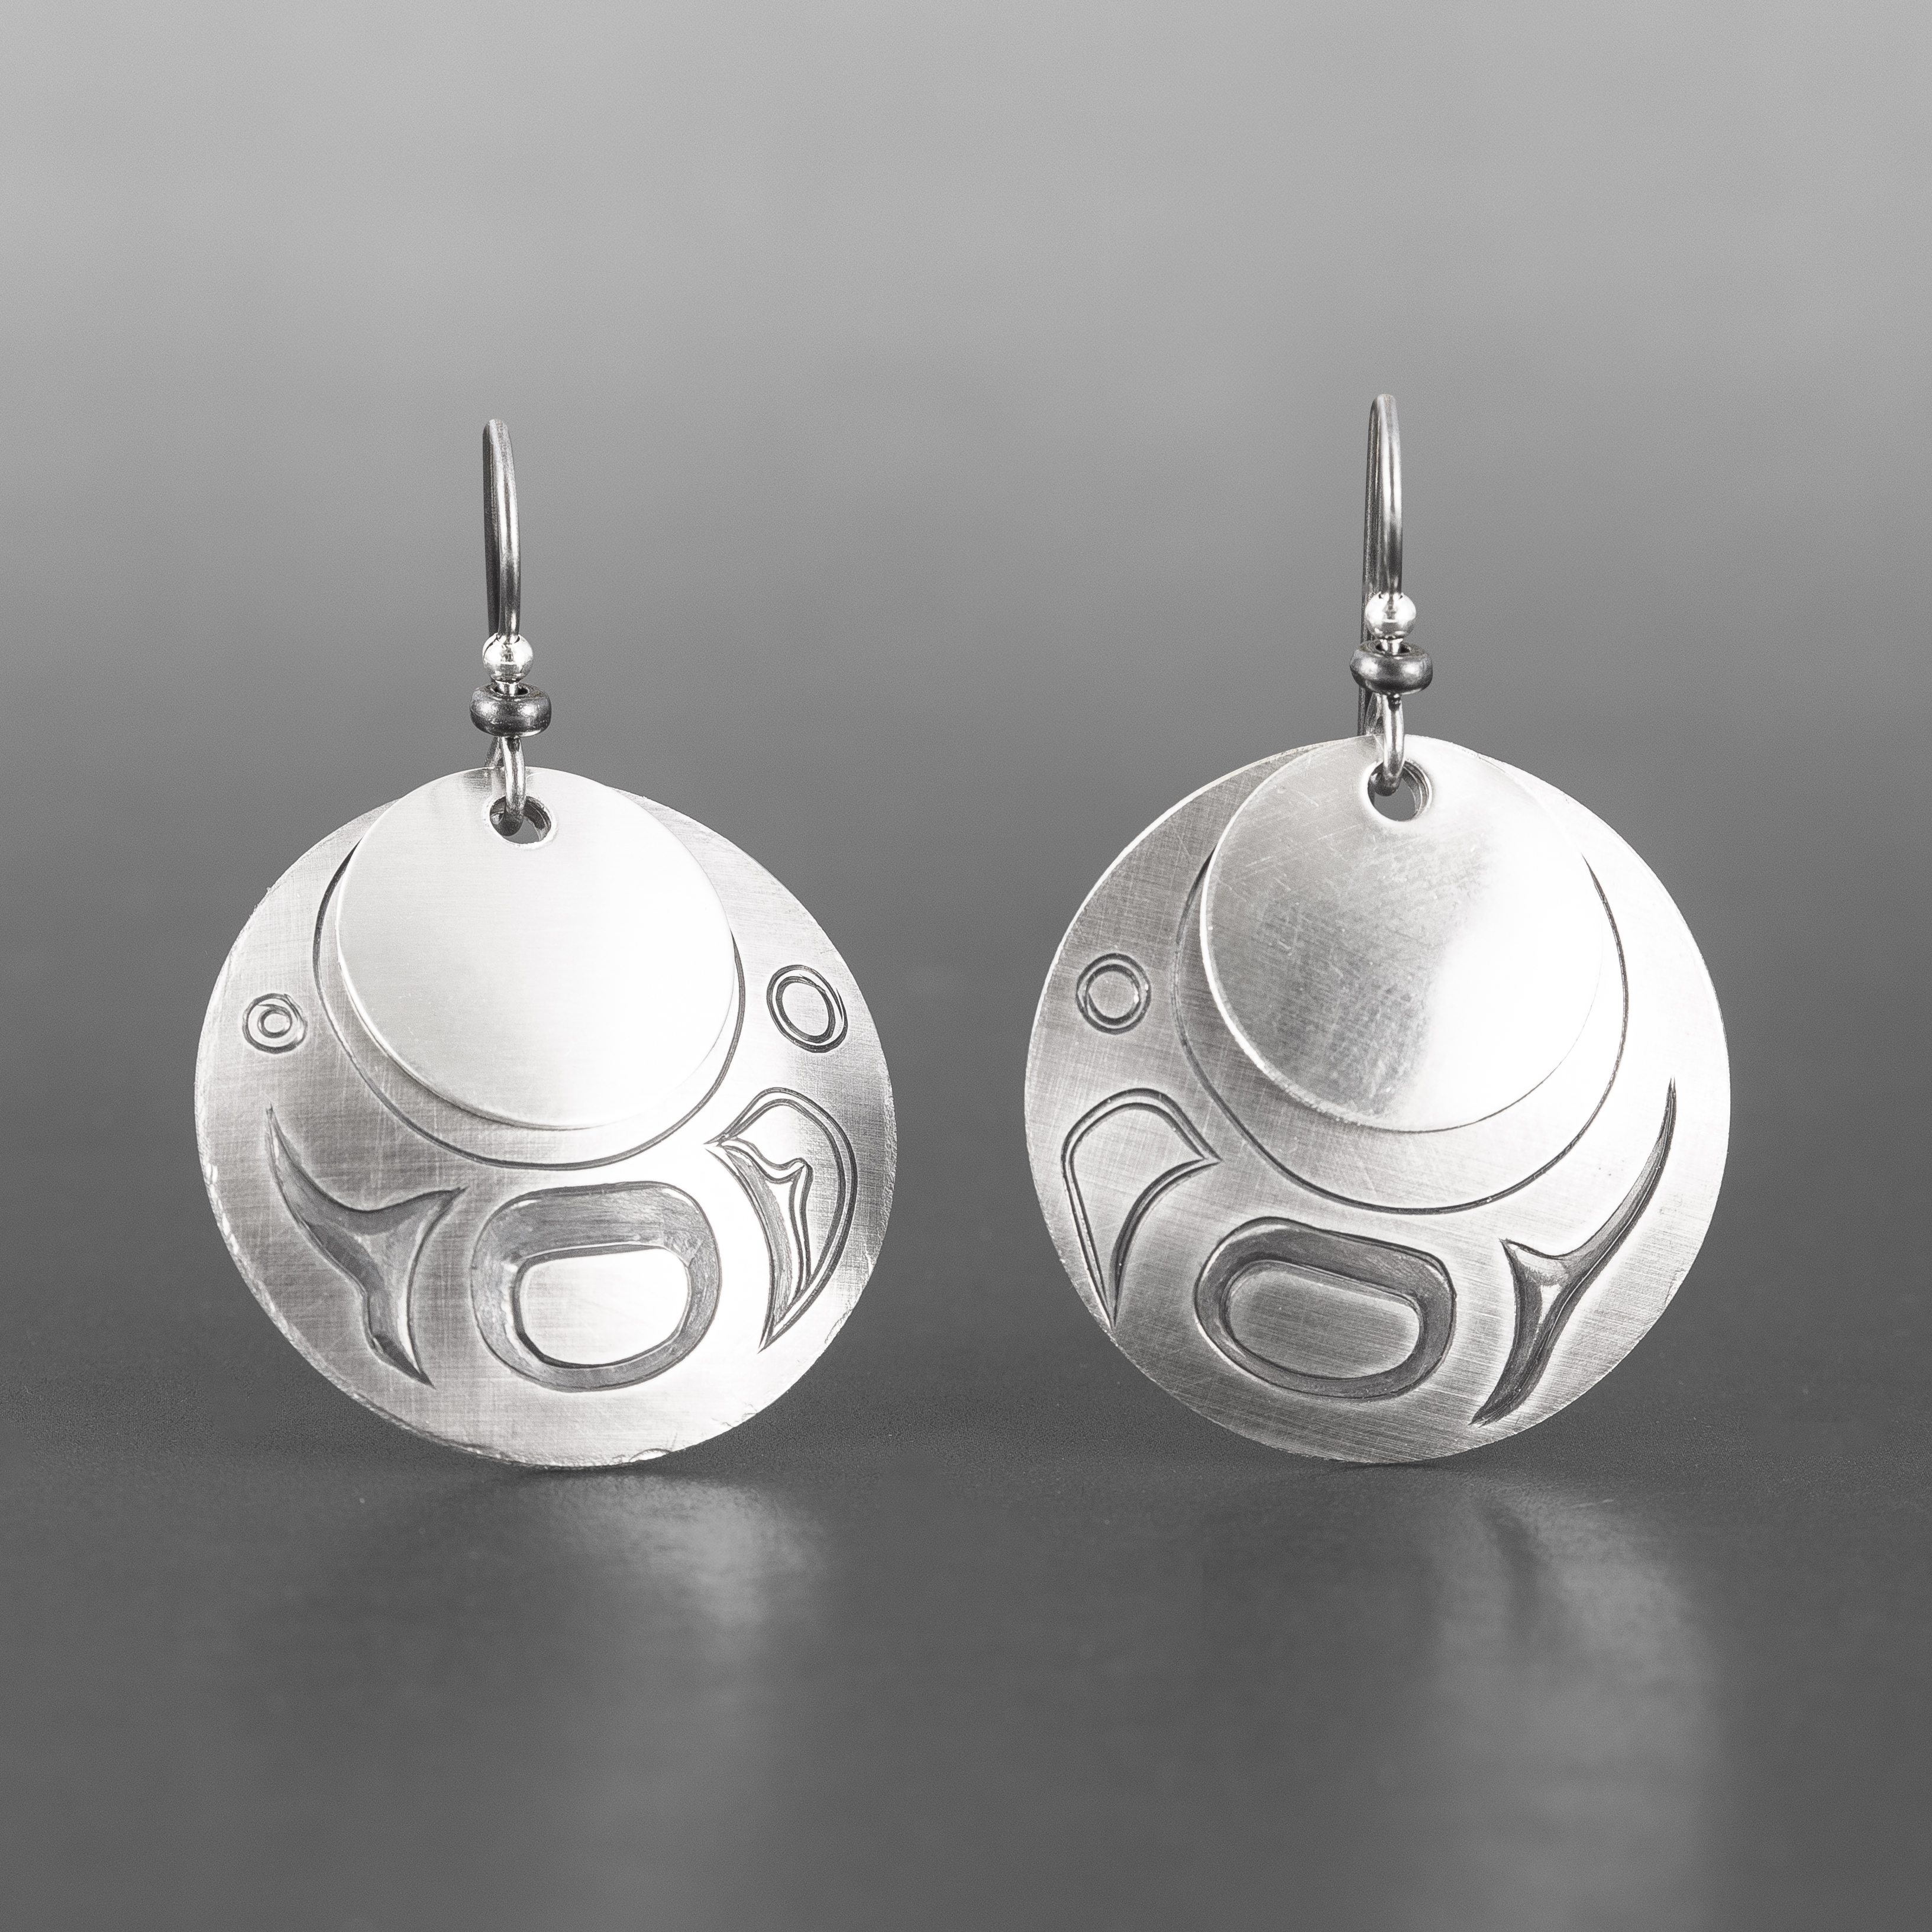 Moonshadow Earrings
Jennifer Younger
Tlingit
Silver
1 ¼” dia.
$200